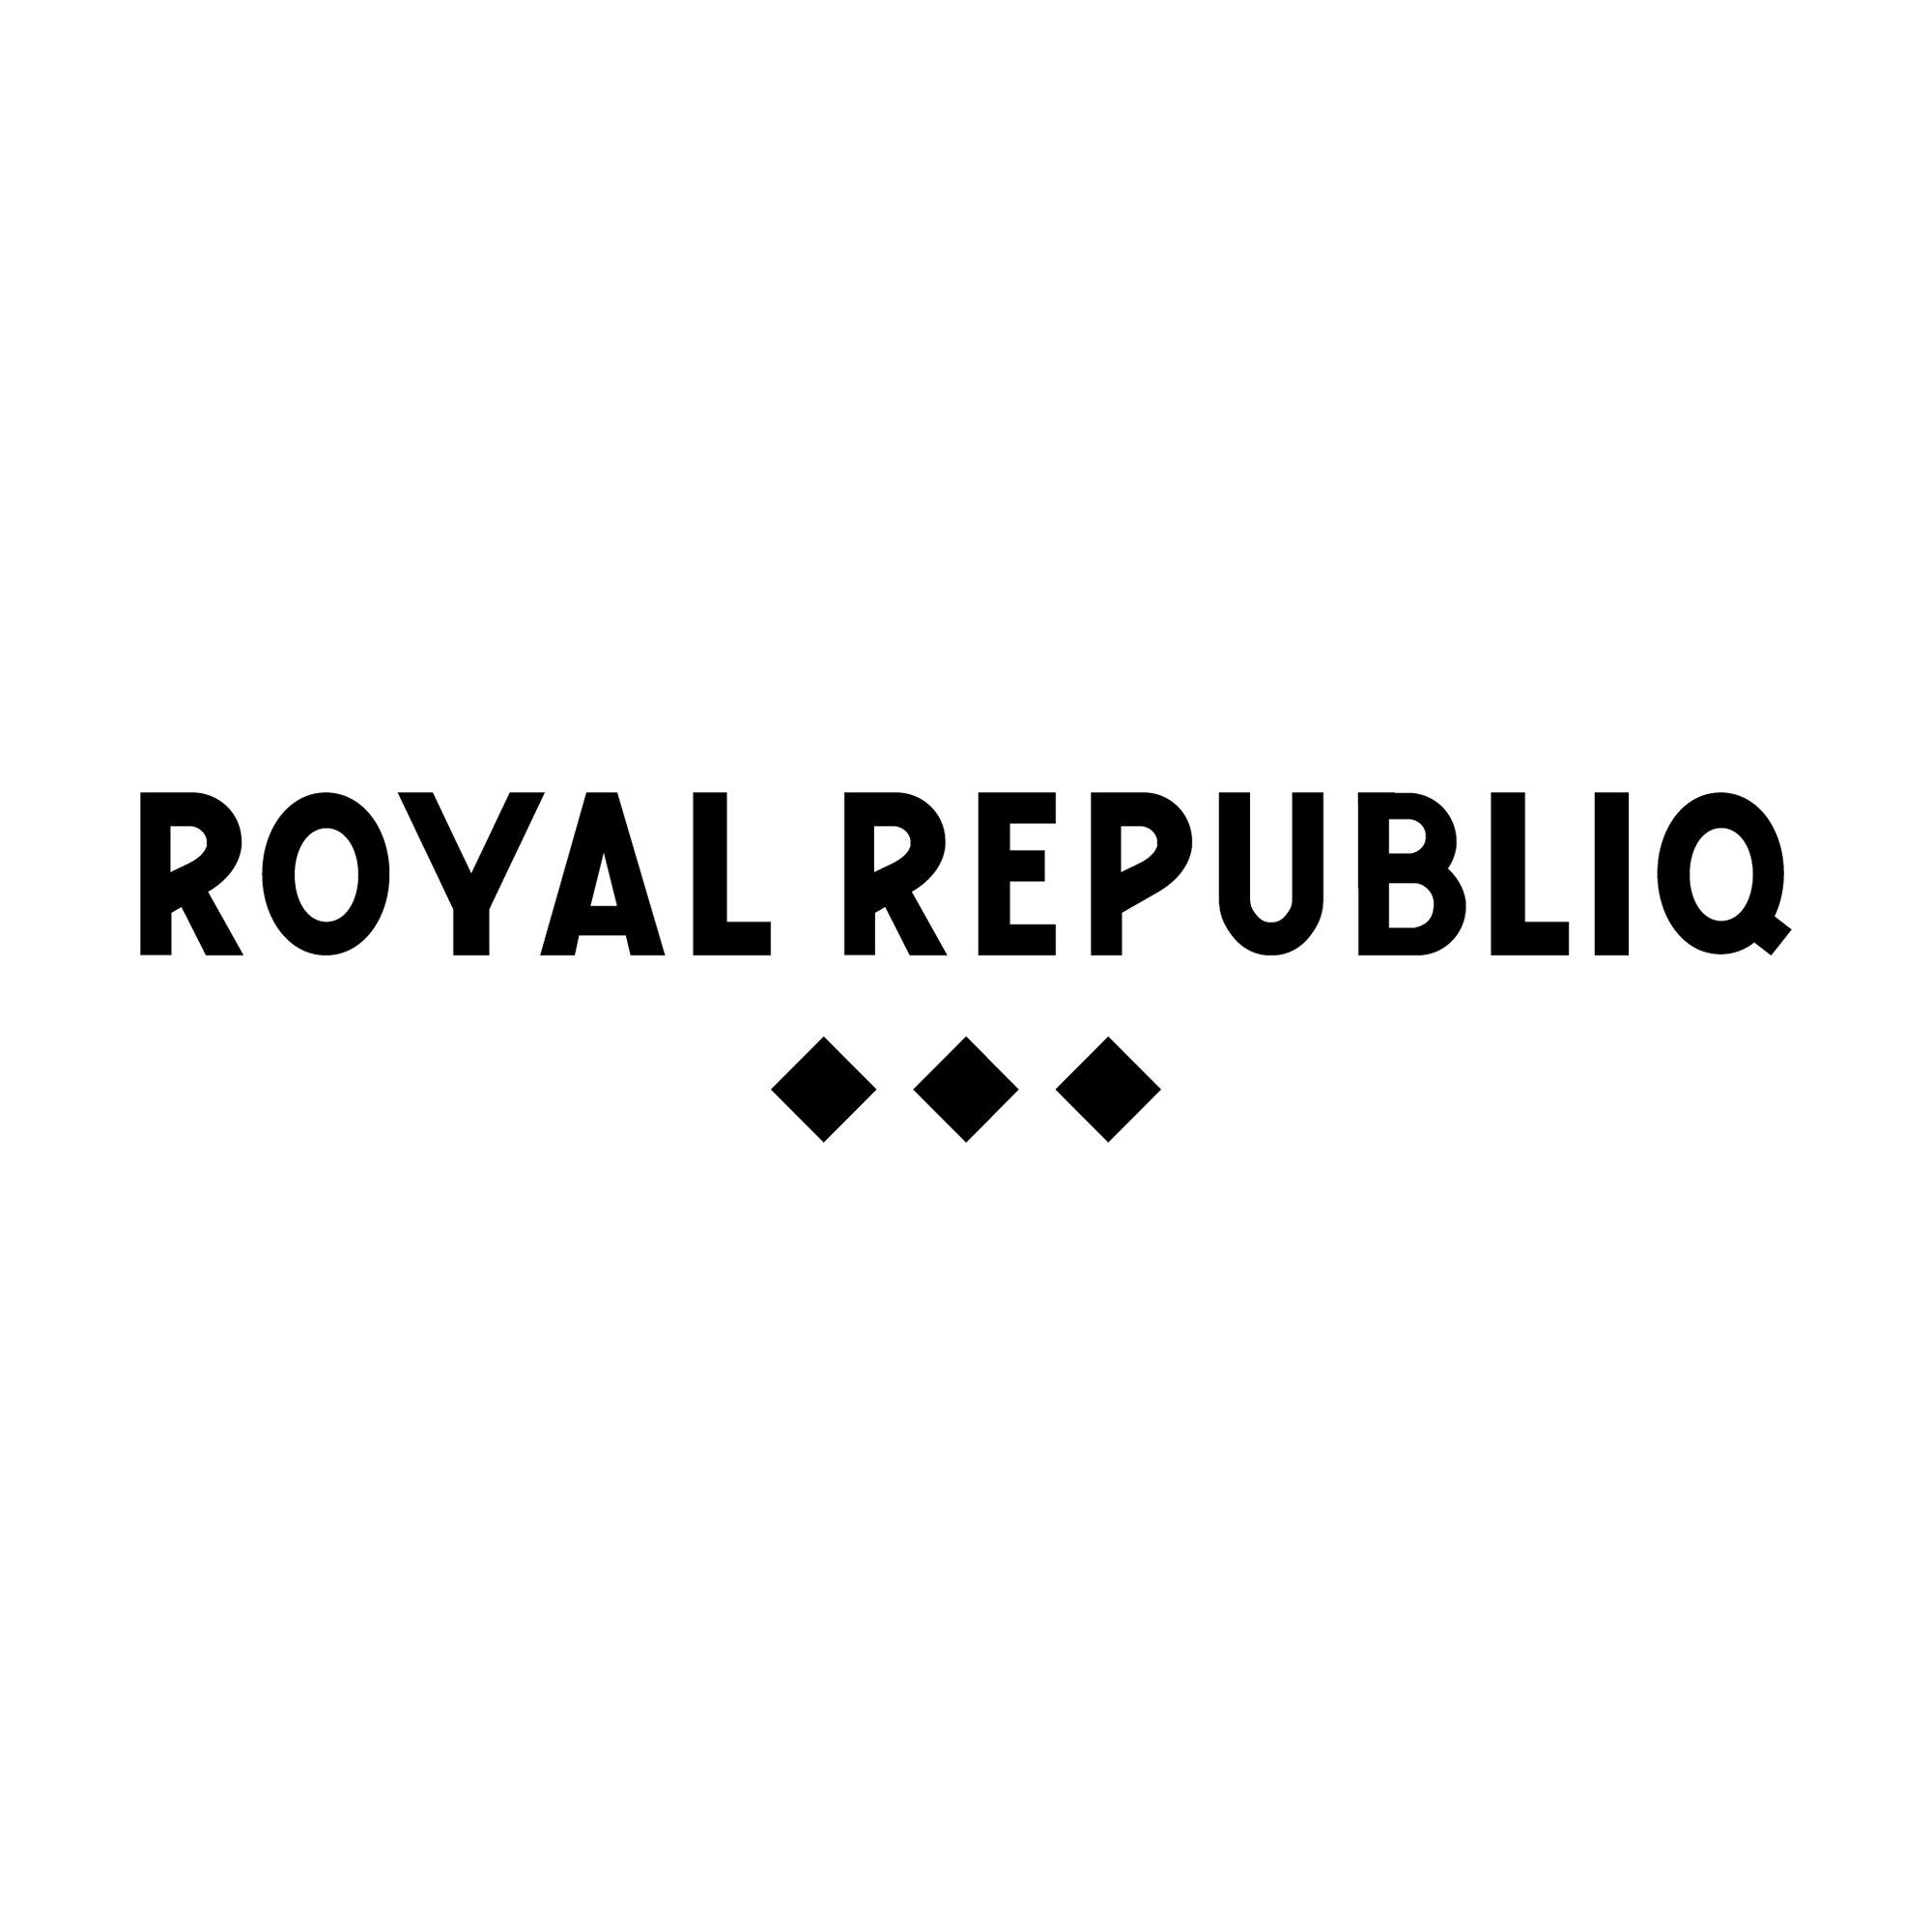 ROYAL REPUBLIQ